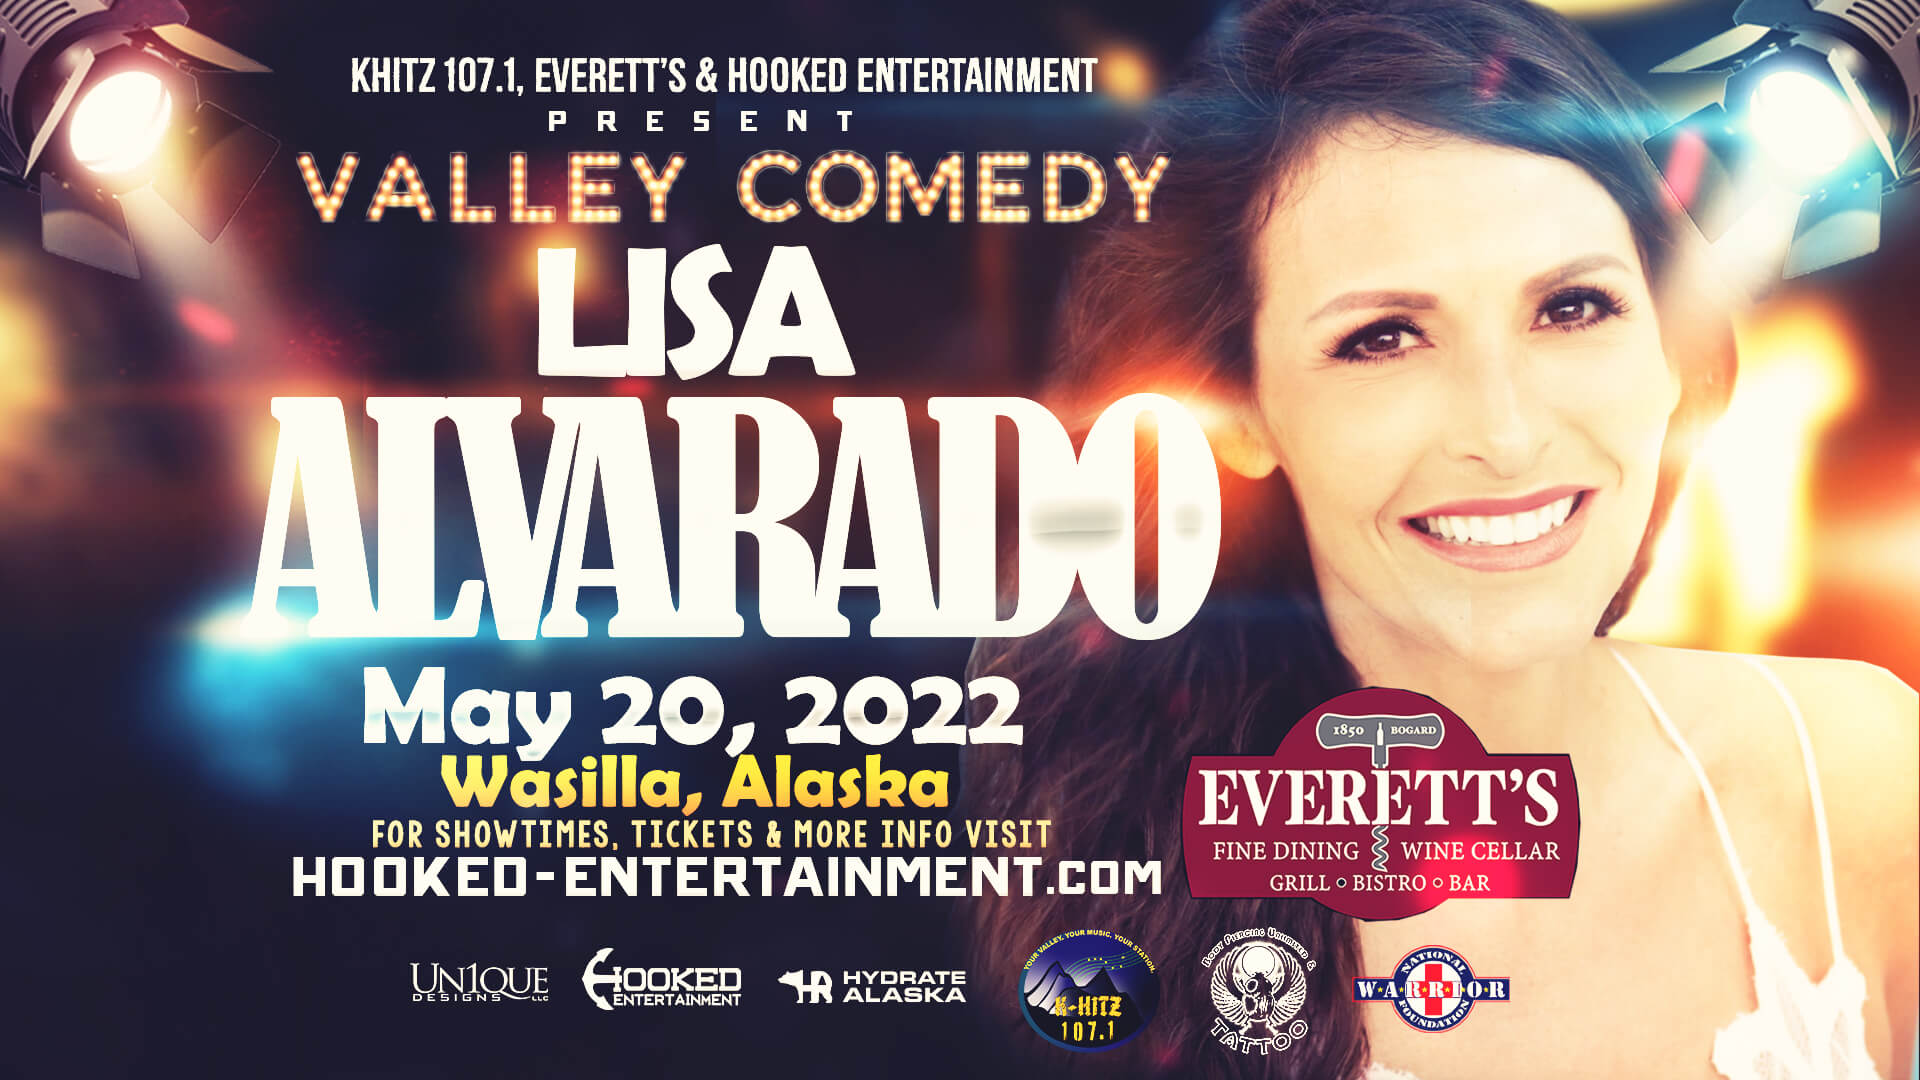 Comedy Series with Lisa Alvarado